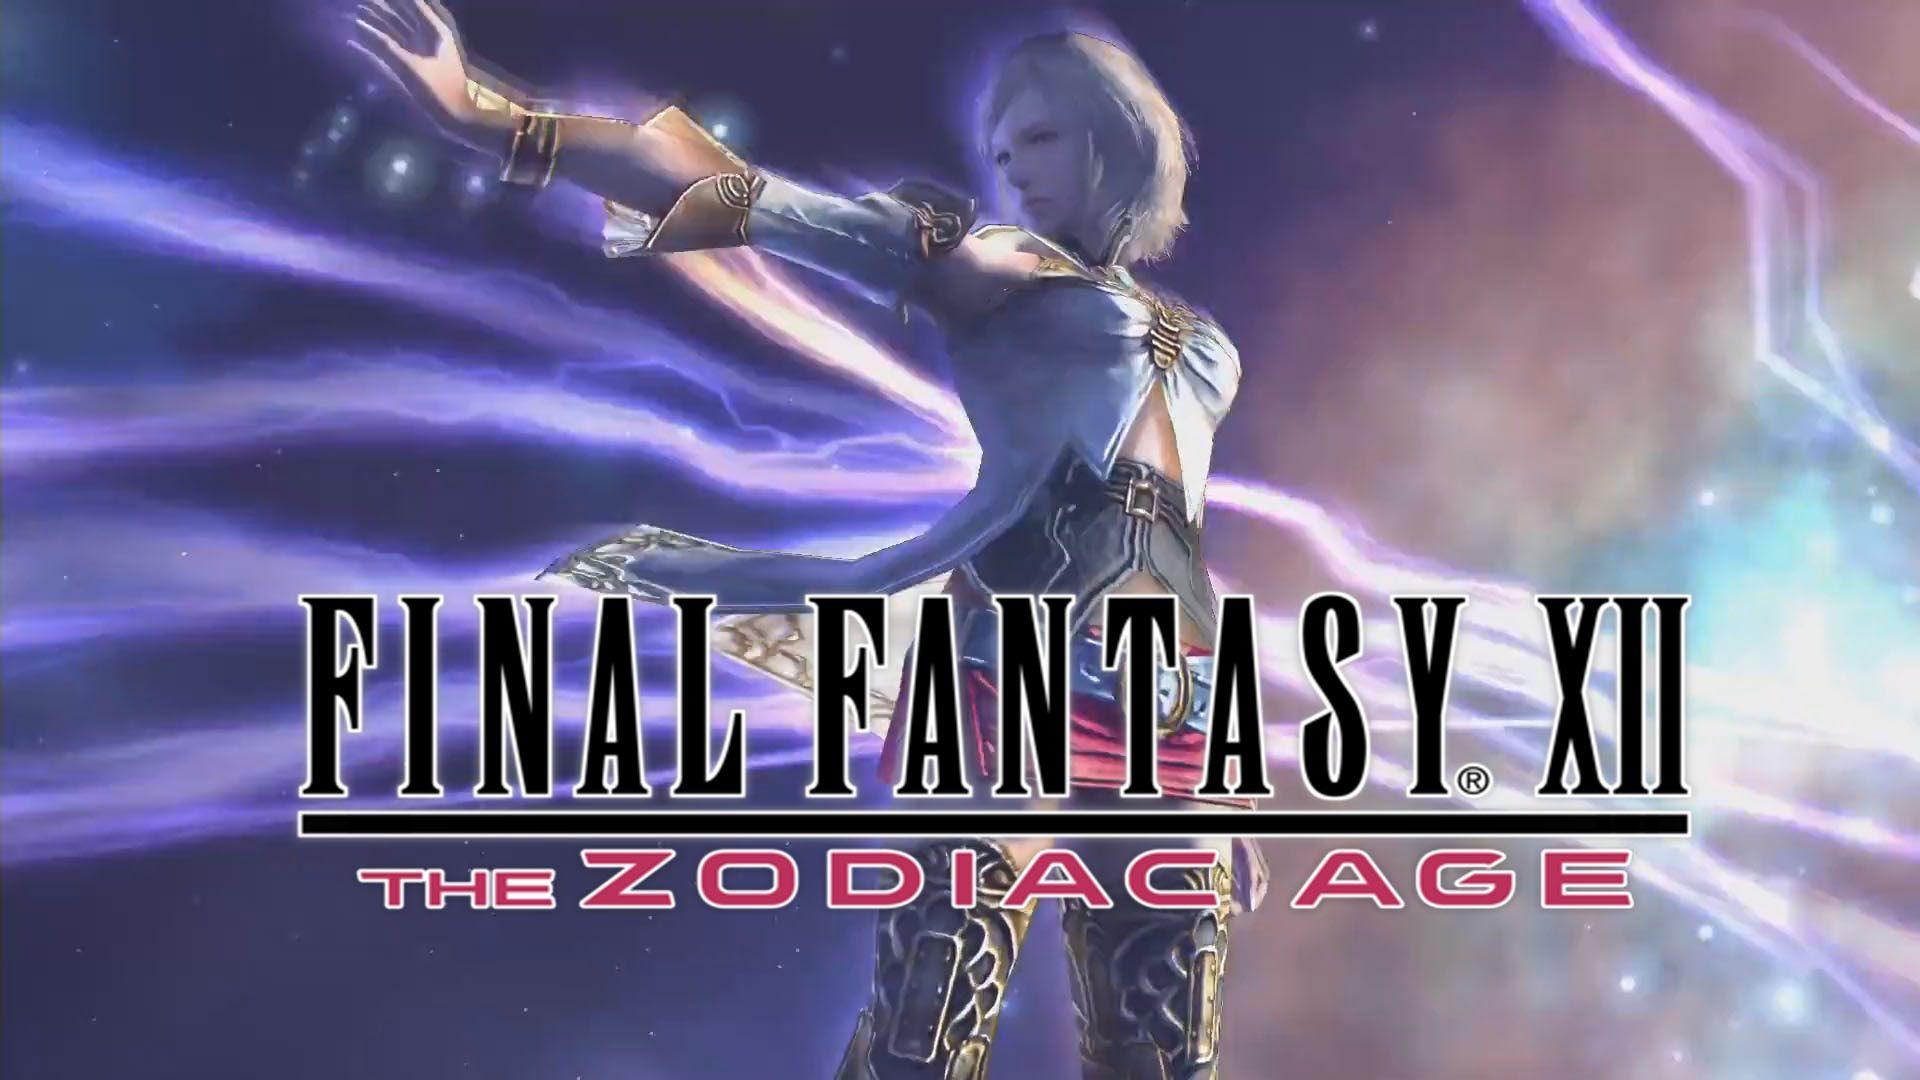 Final Fantasy XII: The Zodiac Age Nets Special Stream for November 21st